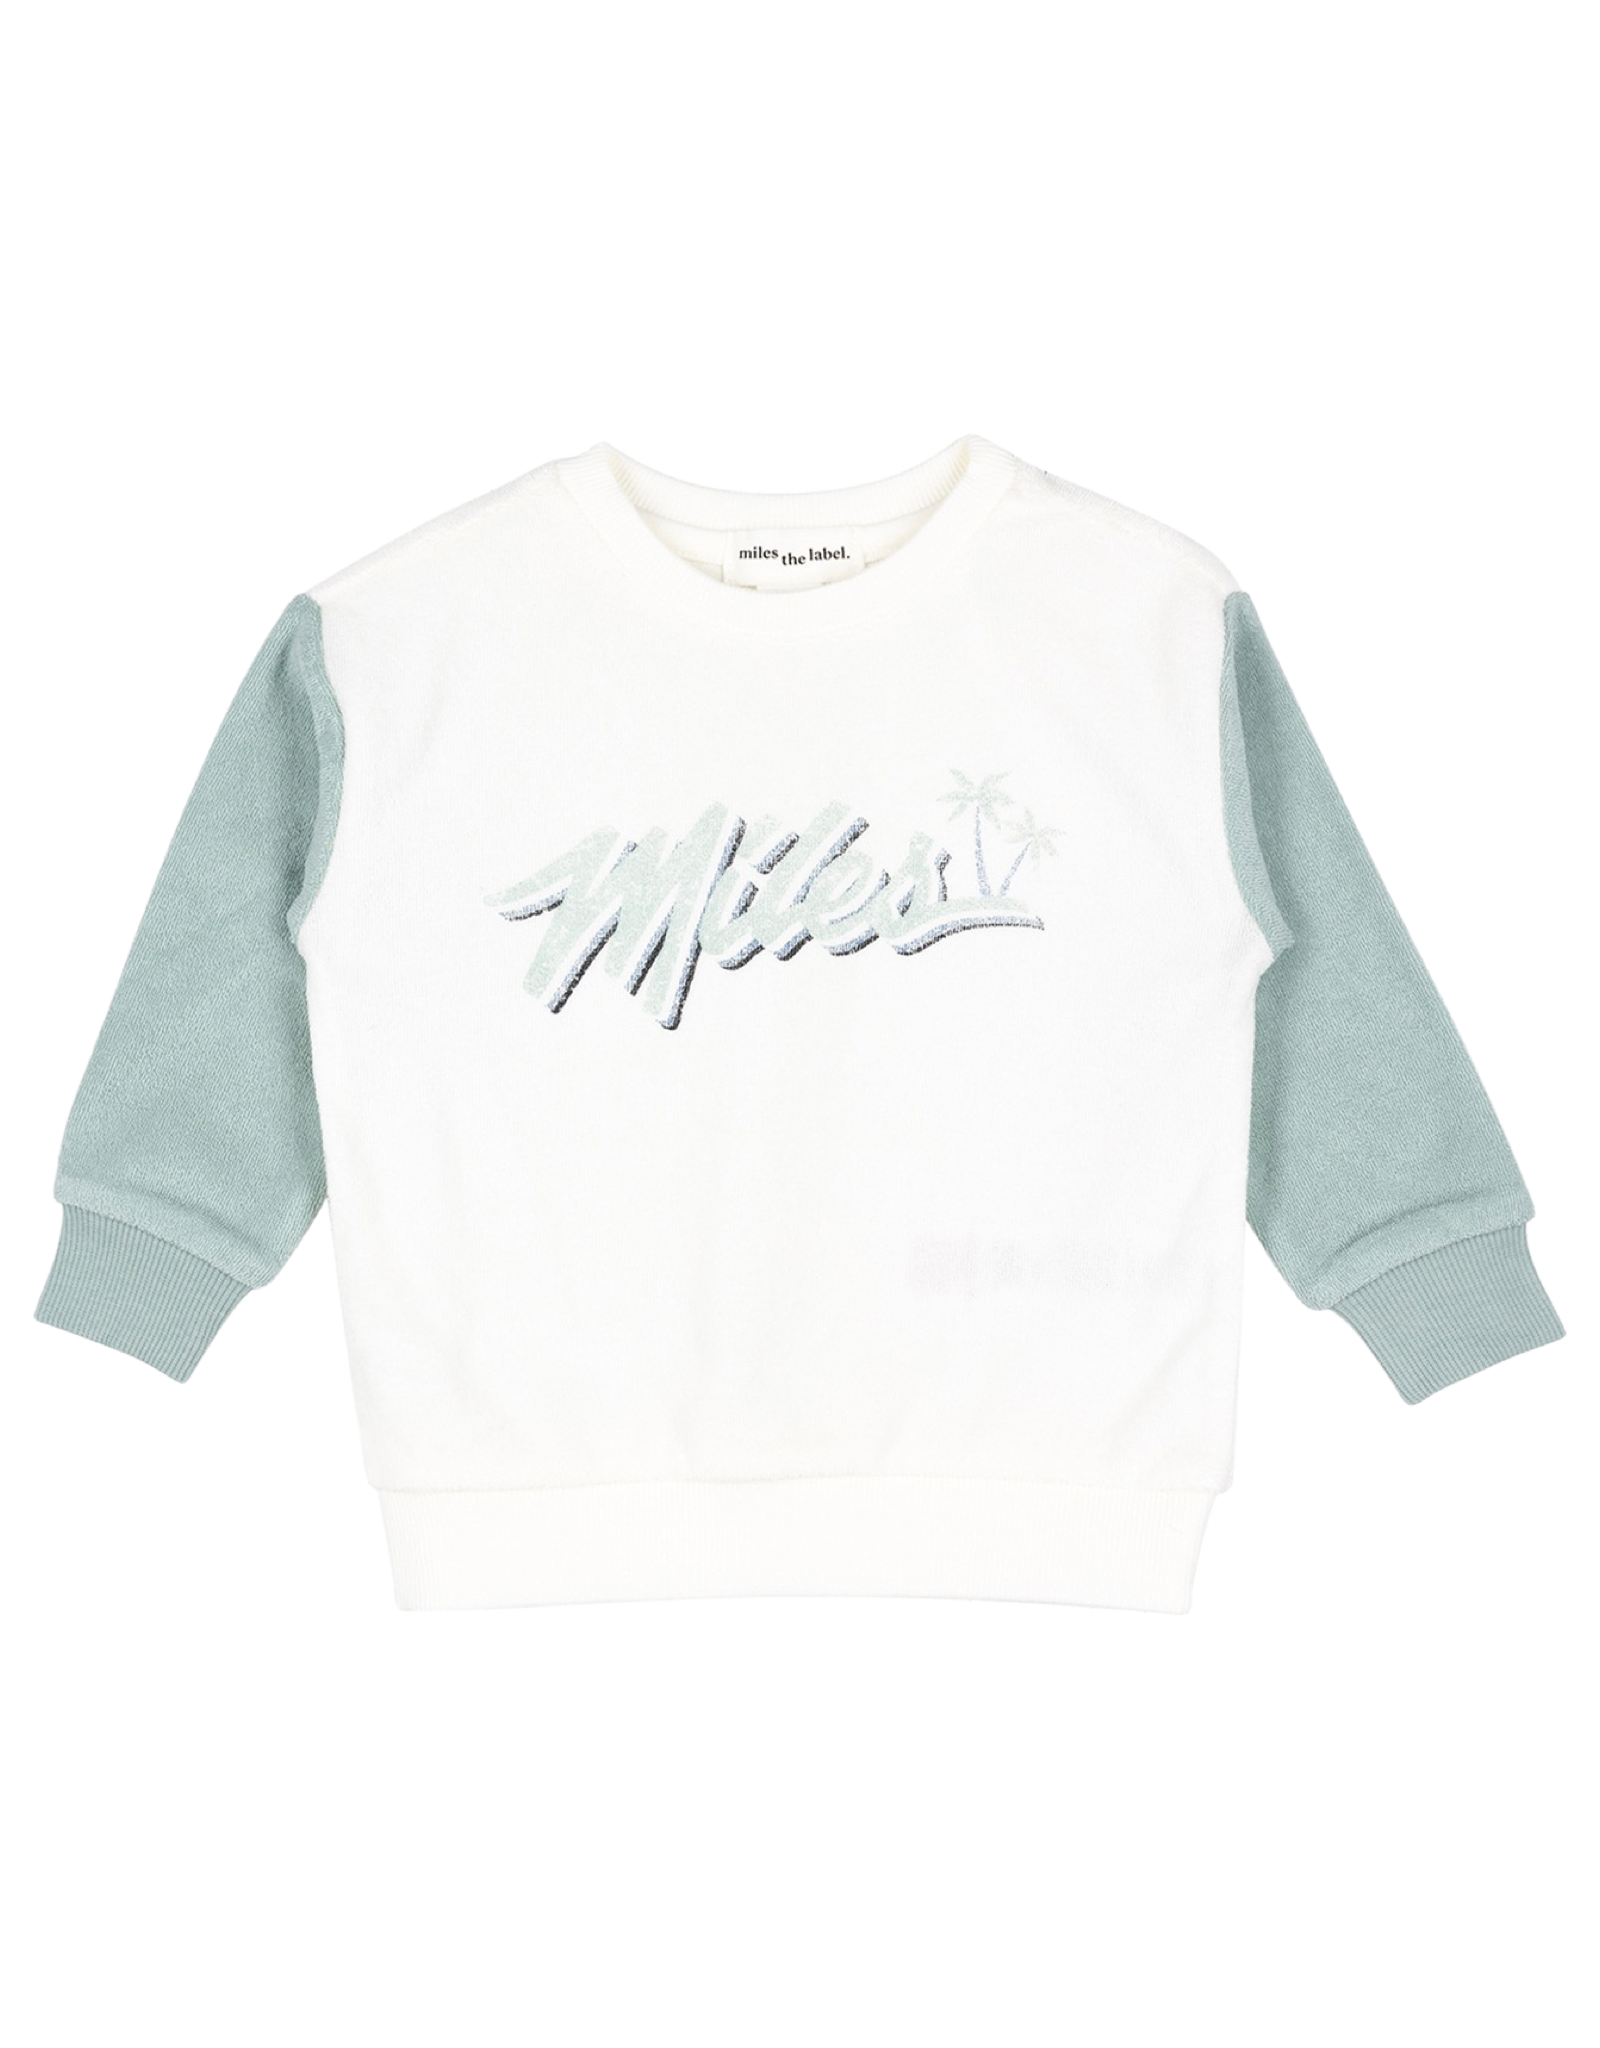 Miles The Label "Miles" Baby Terry Cloth Sweatshirt